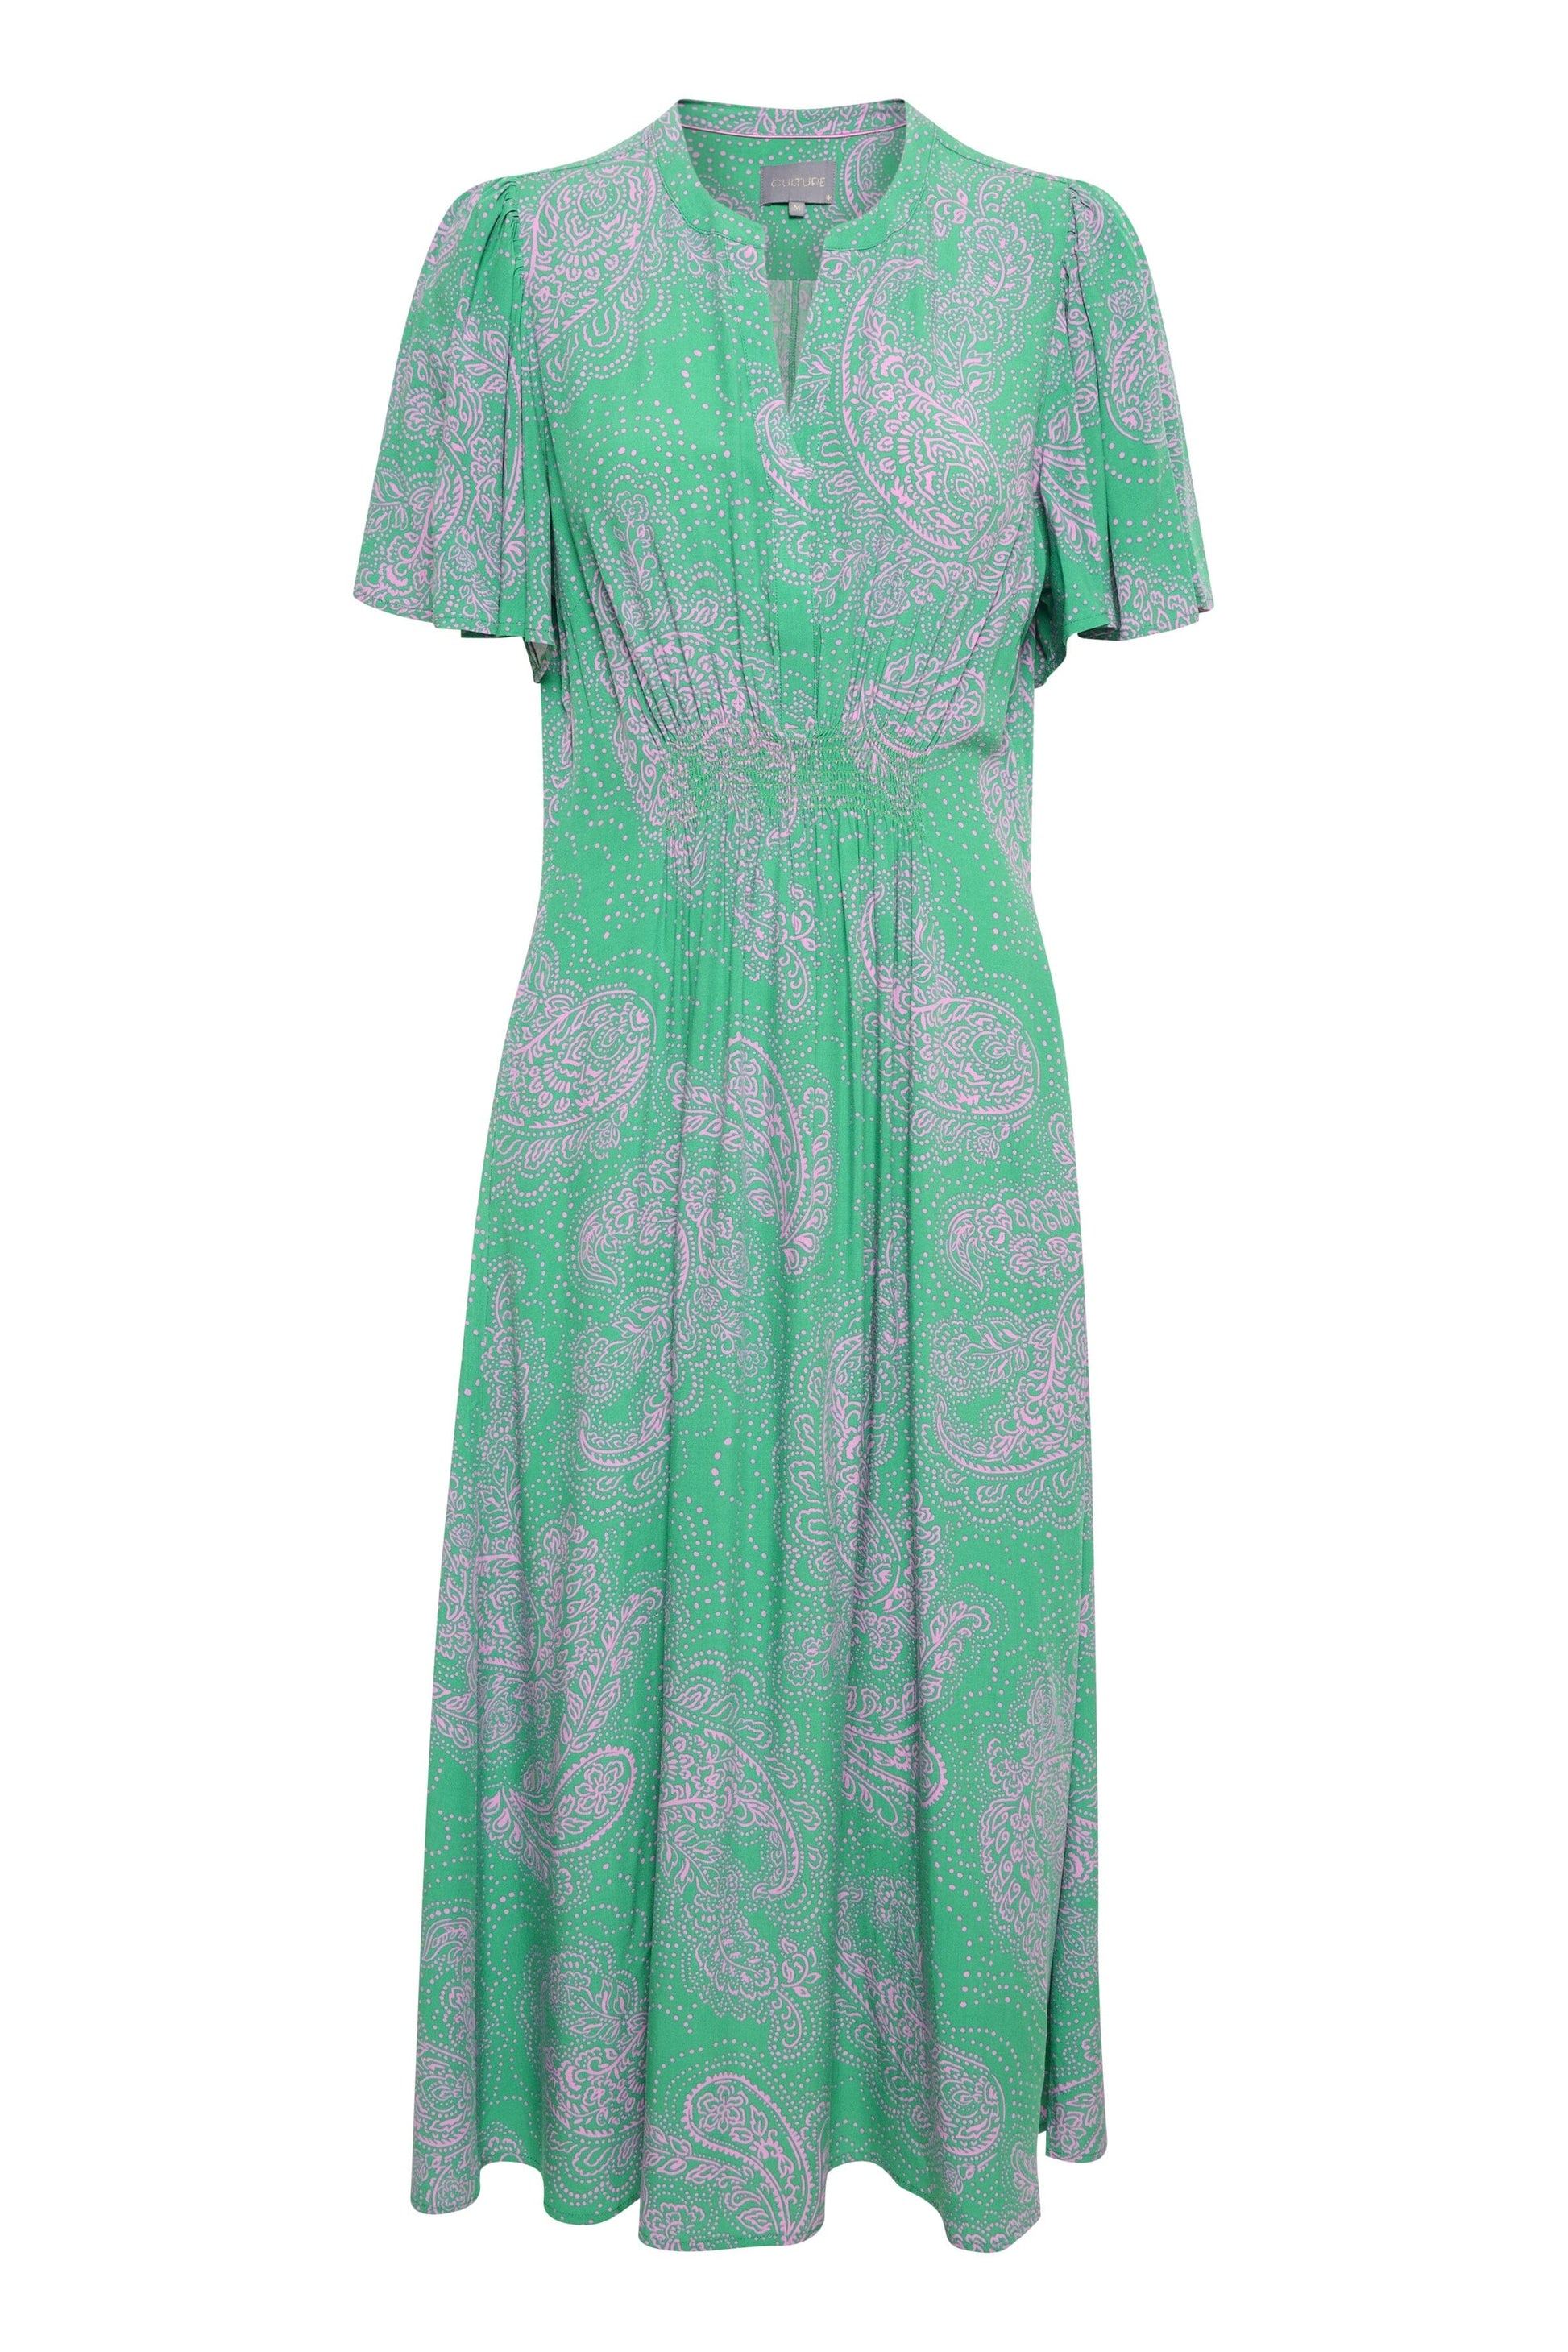 Polly Long Dress in Green Long Dress Culture 